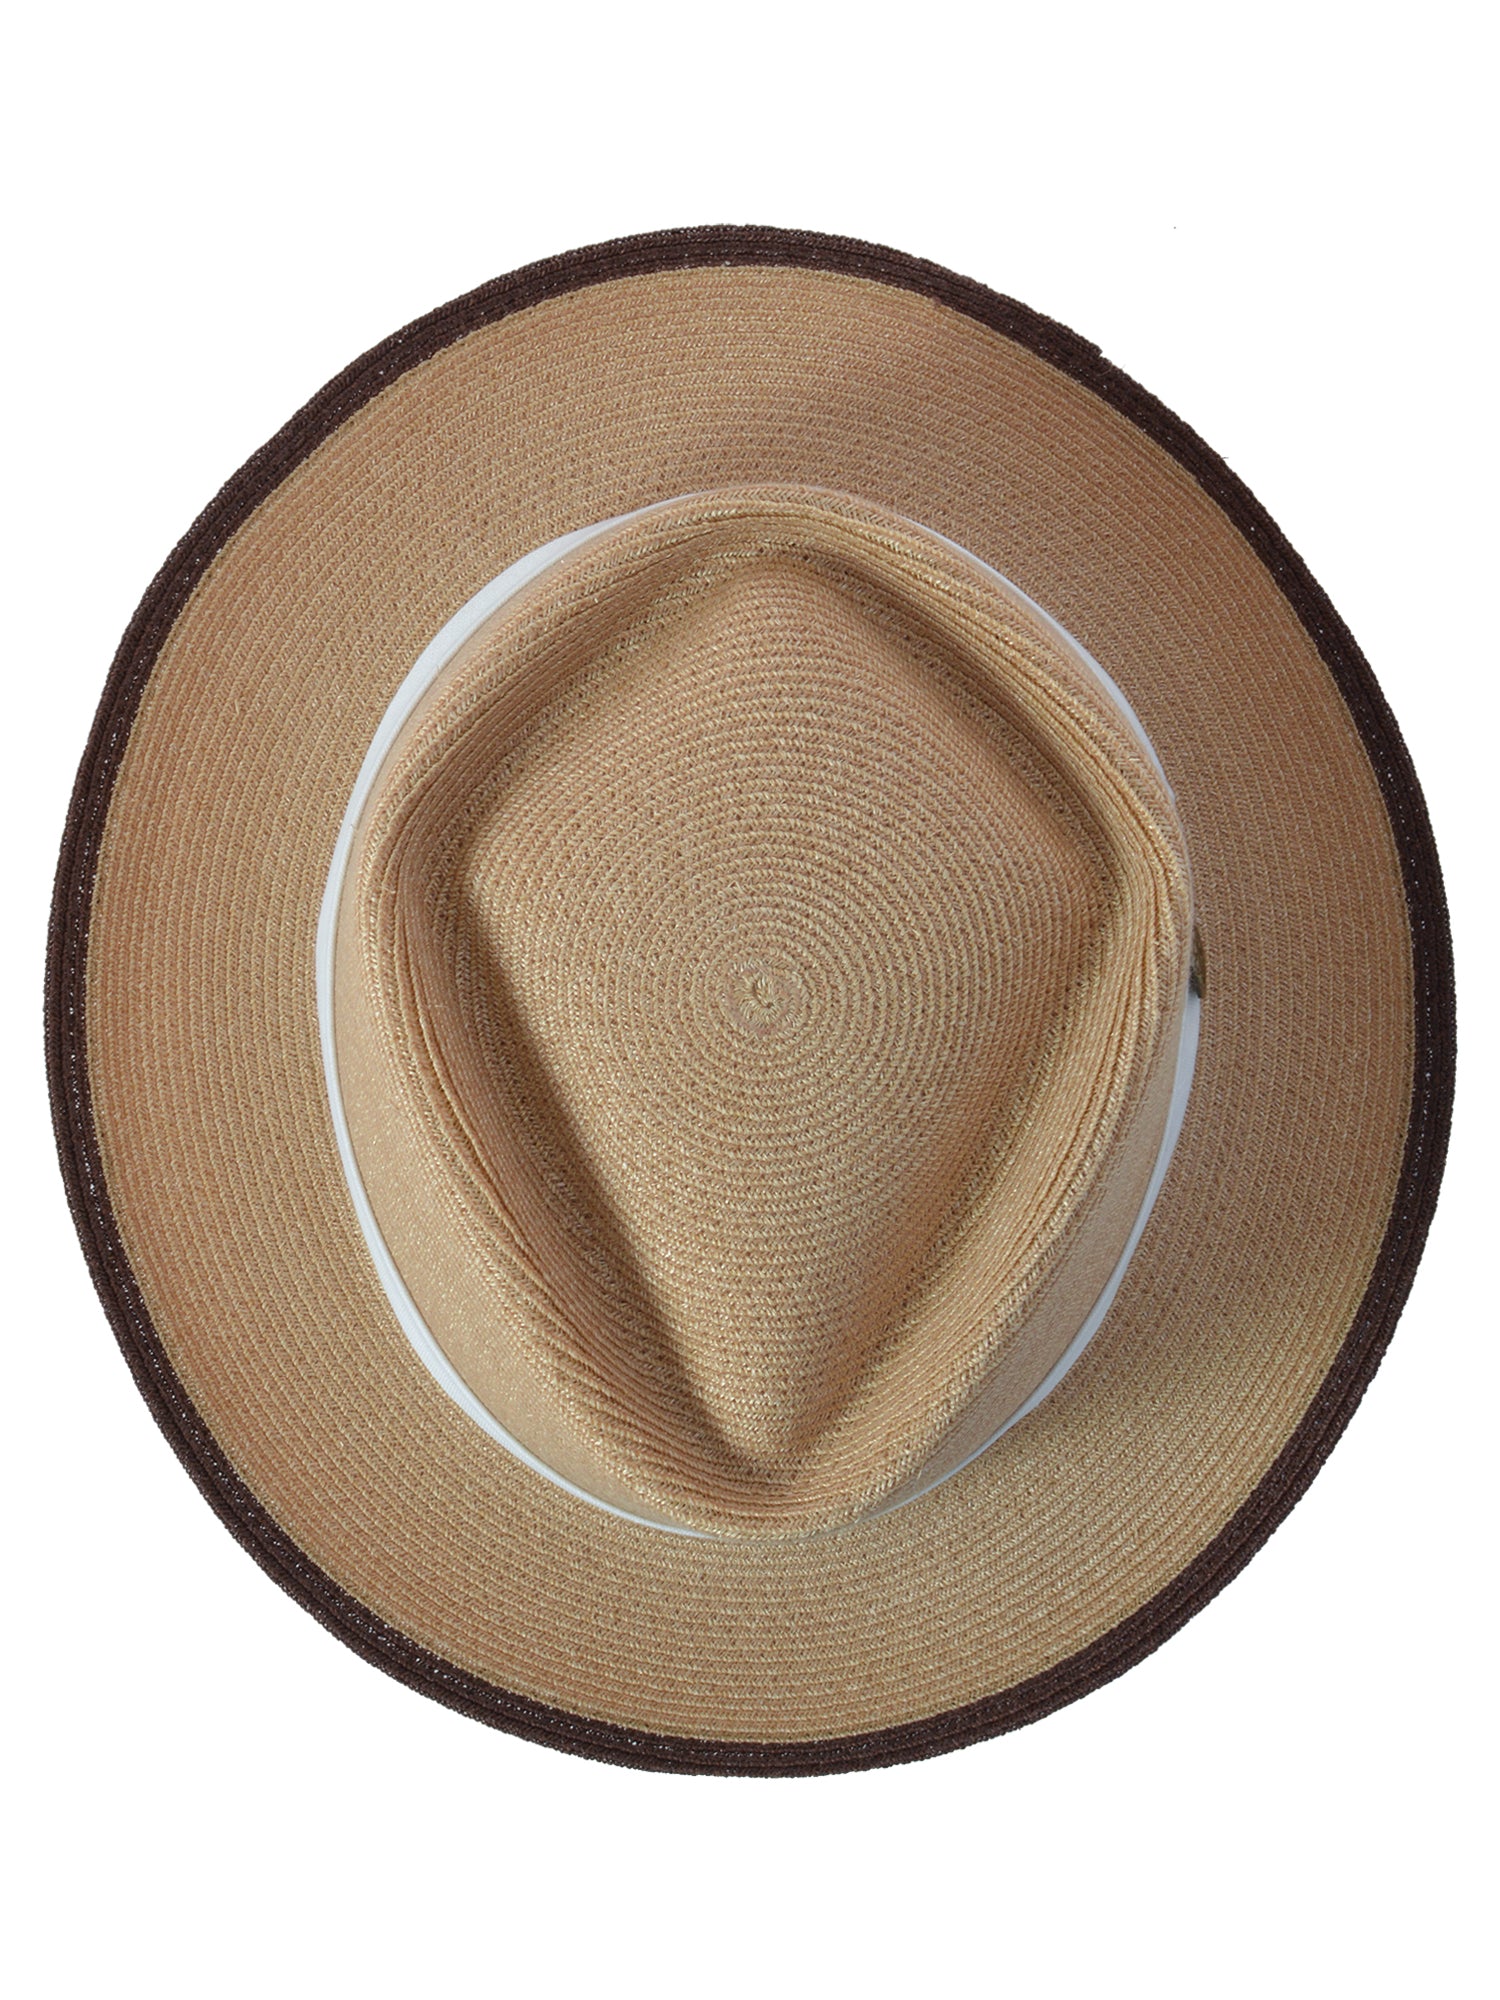 Dobbs The Lineup Hemp Straw Fedora Hat in Beige/Chocolate